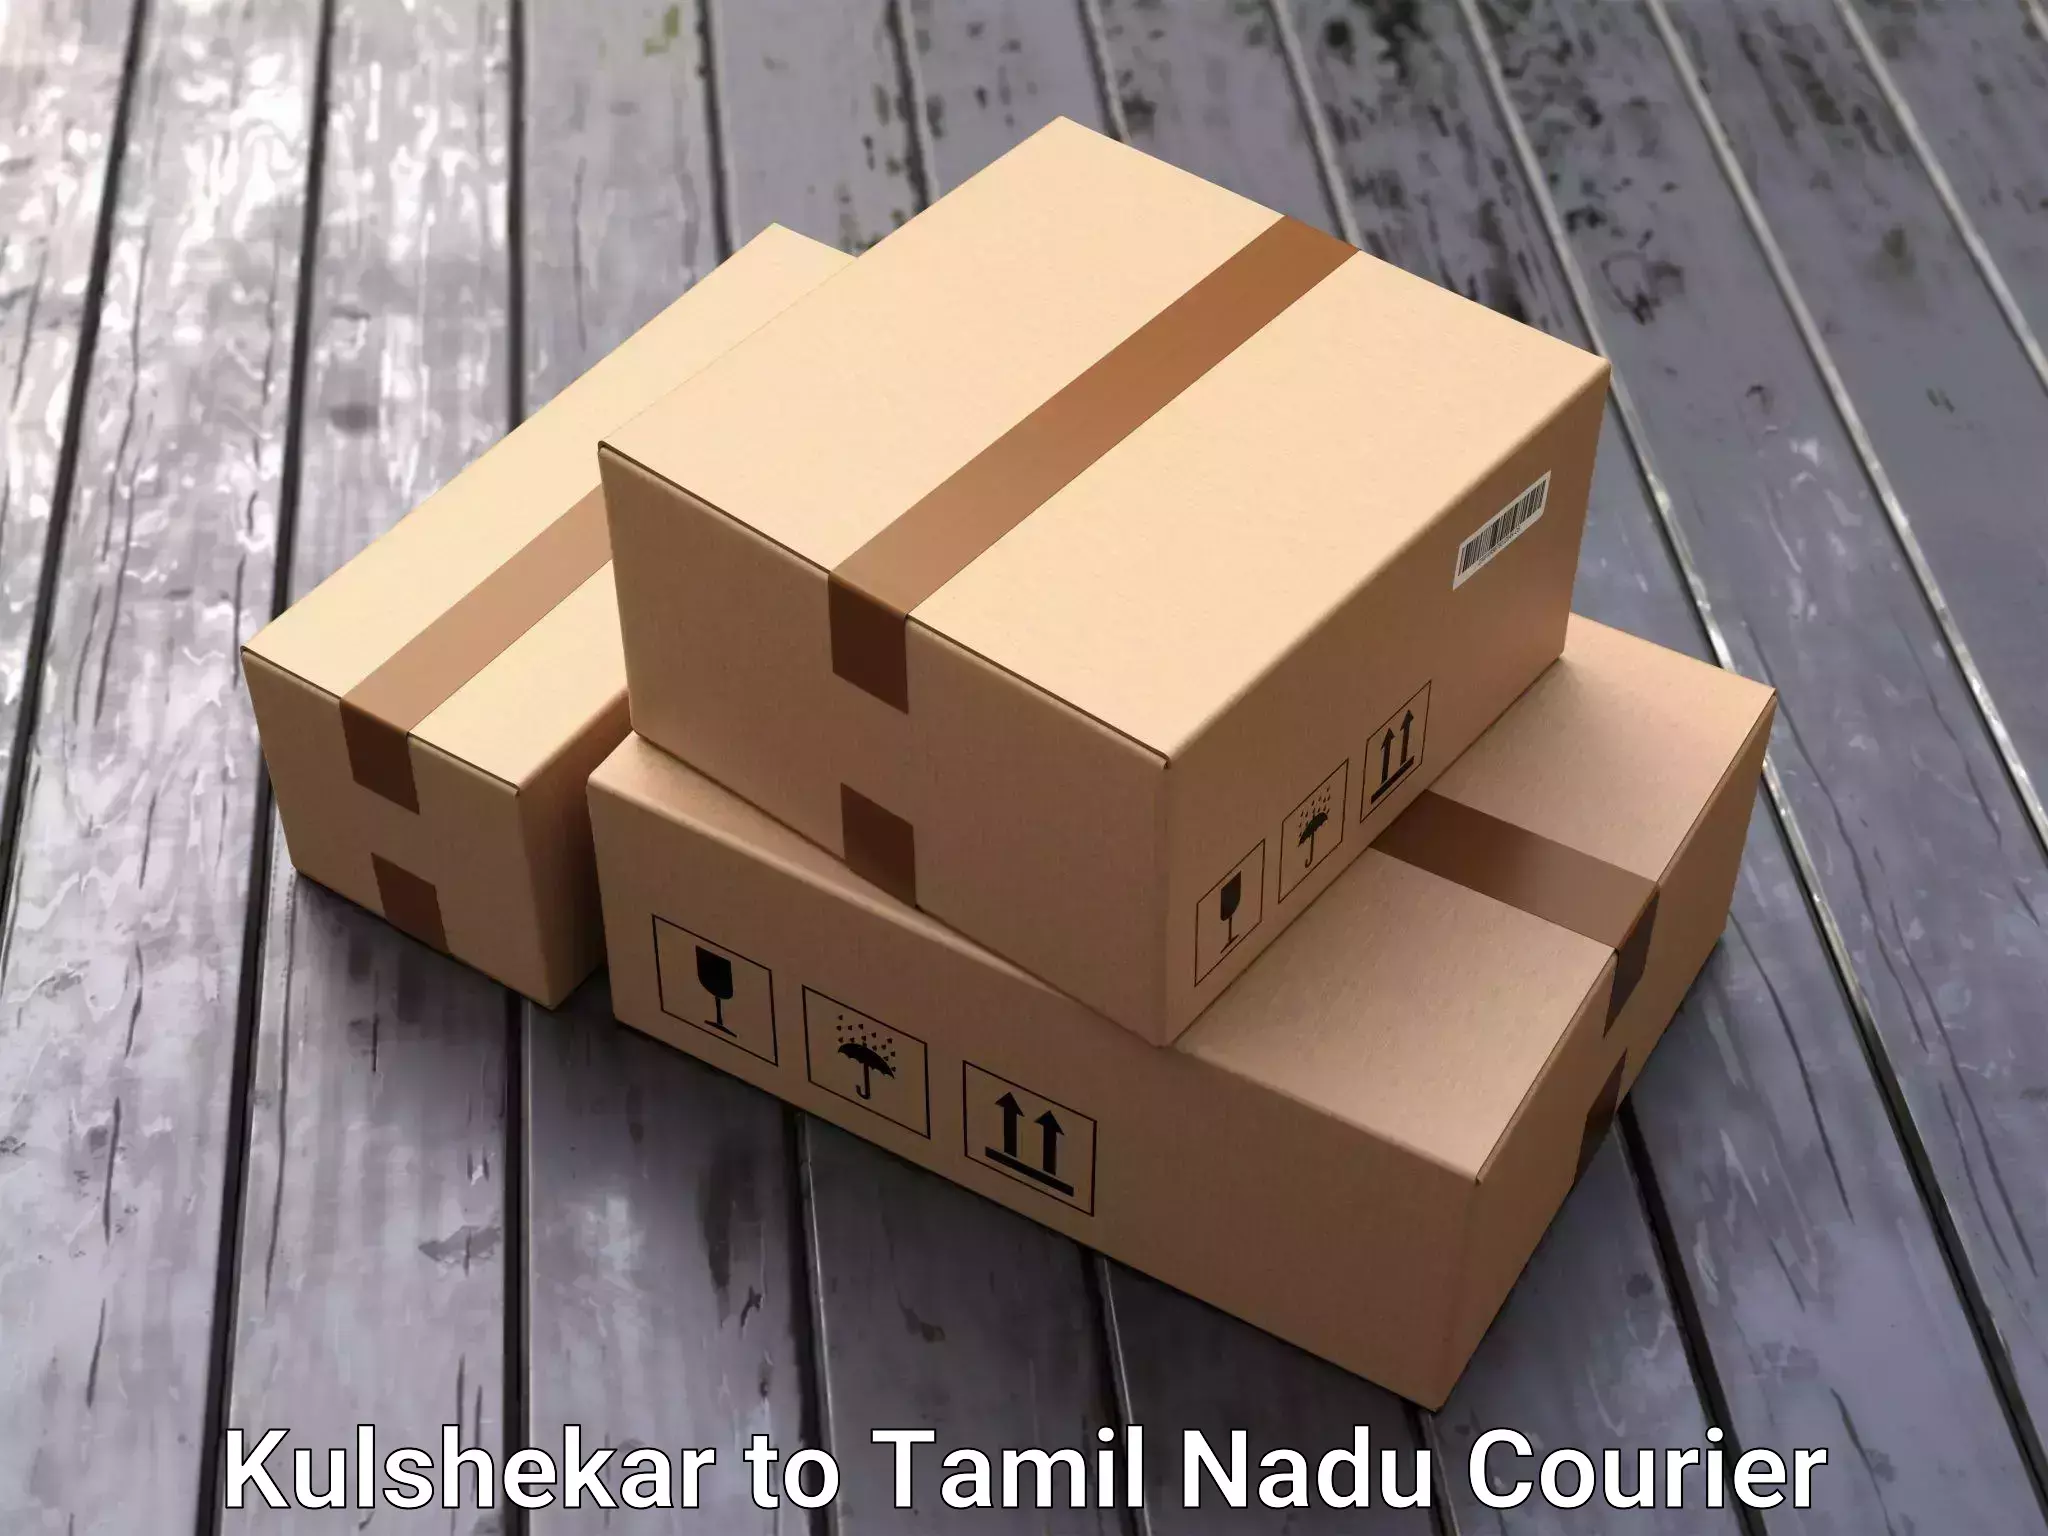 Moving and storage services Kulshekar to Anna University Chennai